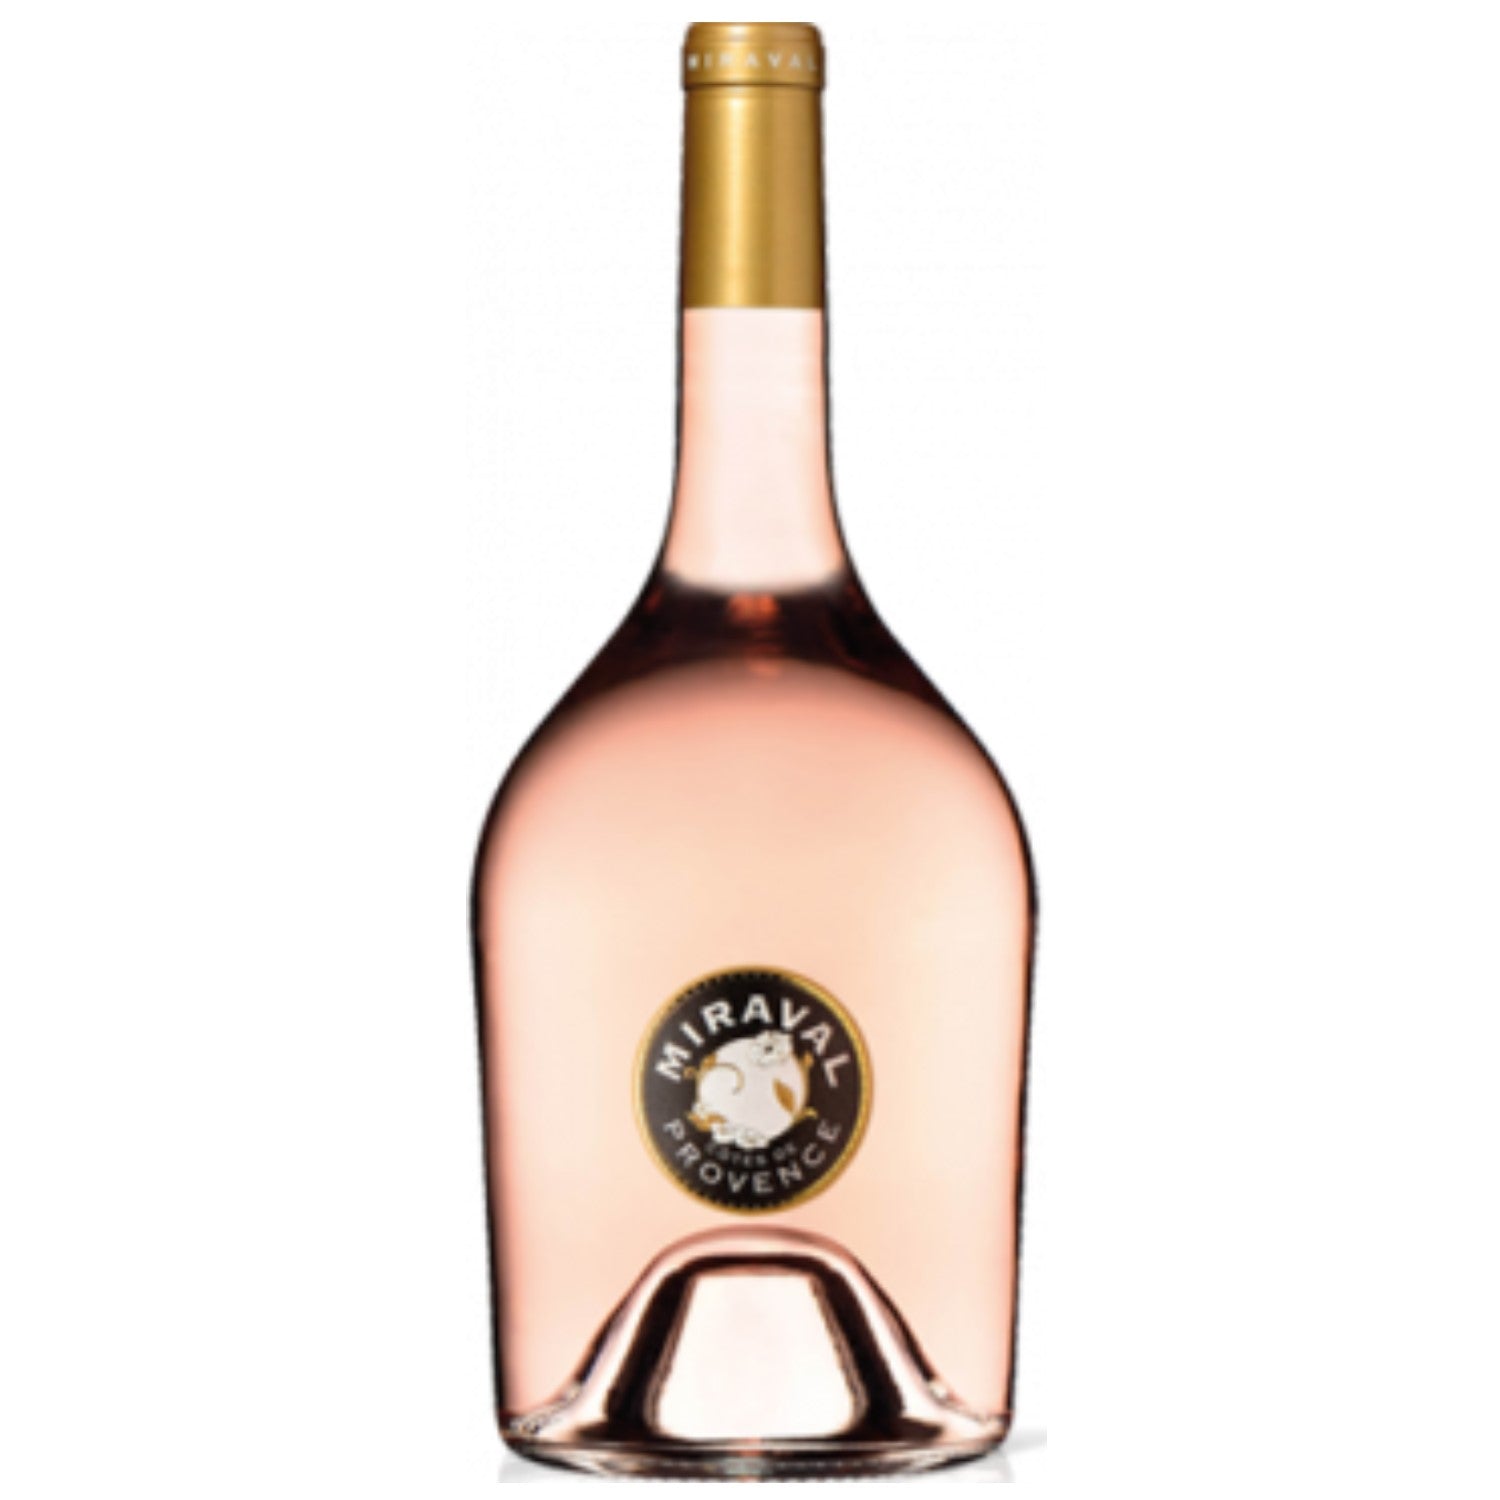 Château Miraval Côtes de Provence Rosé Magnum Roséwein Wein trocken Frankreich (2 x 1.5l) - Versanel -